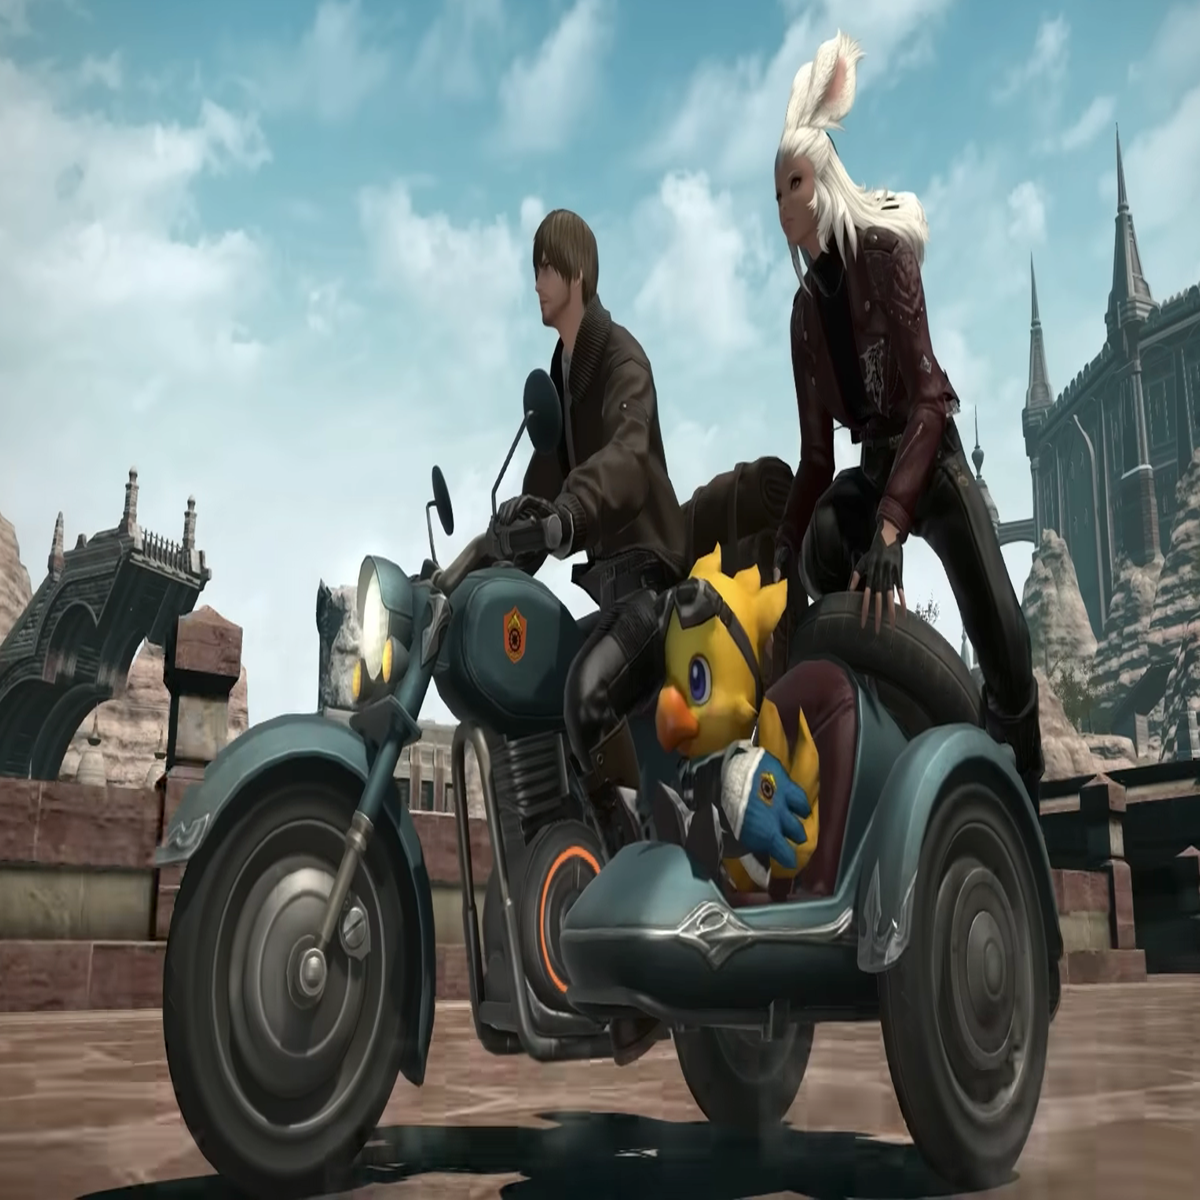 Final Fantasy 14's new motorcycle mount has its adorable chocobo ride  shotgun